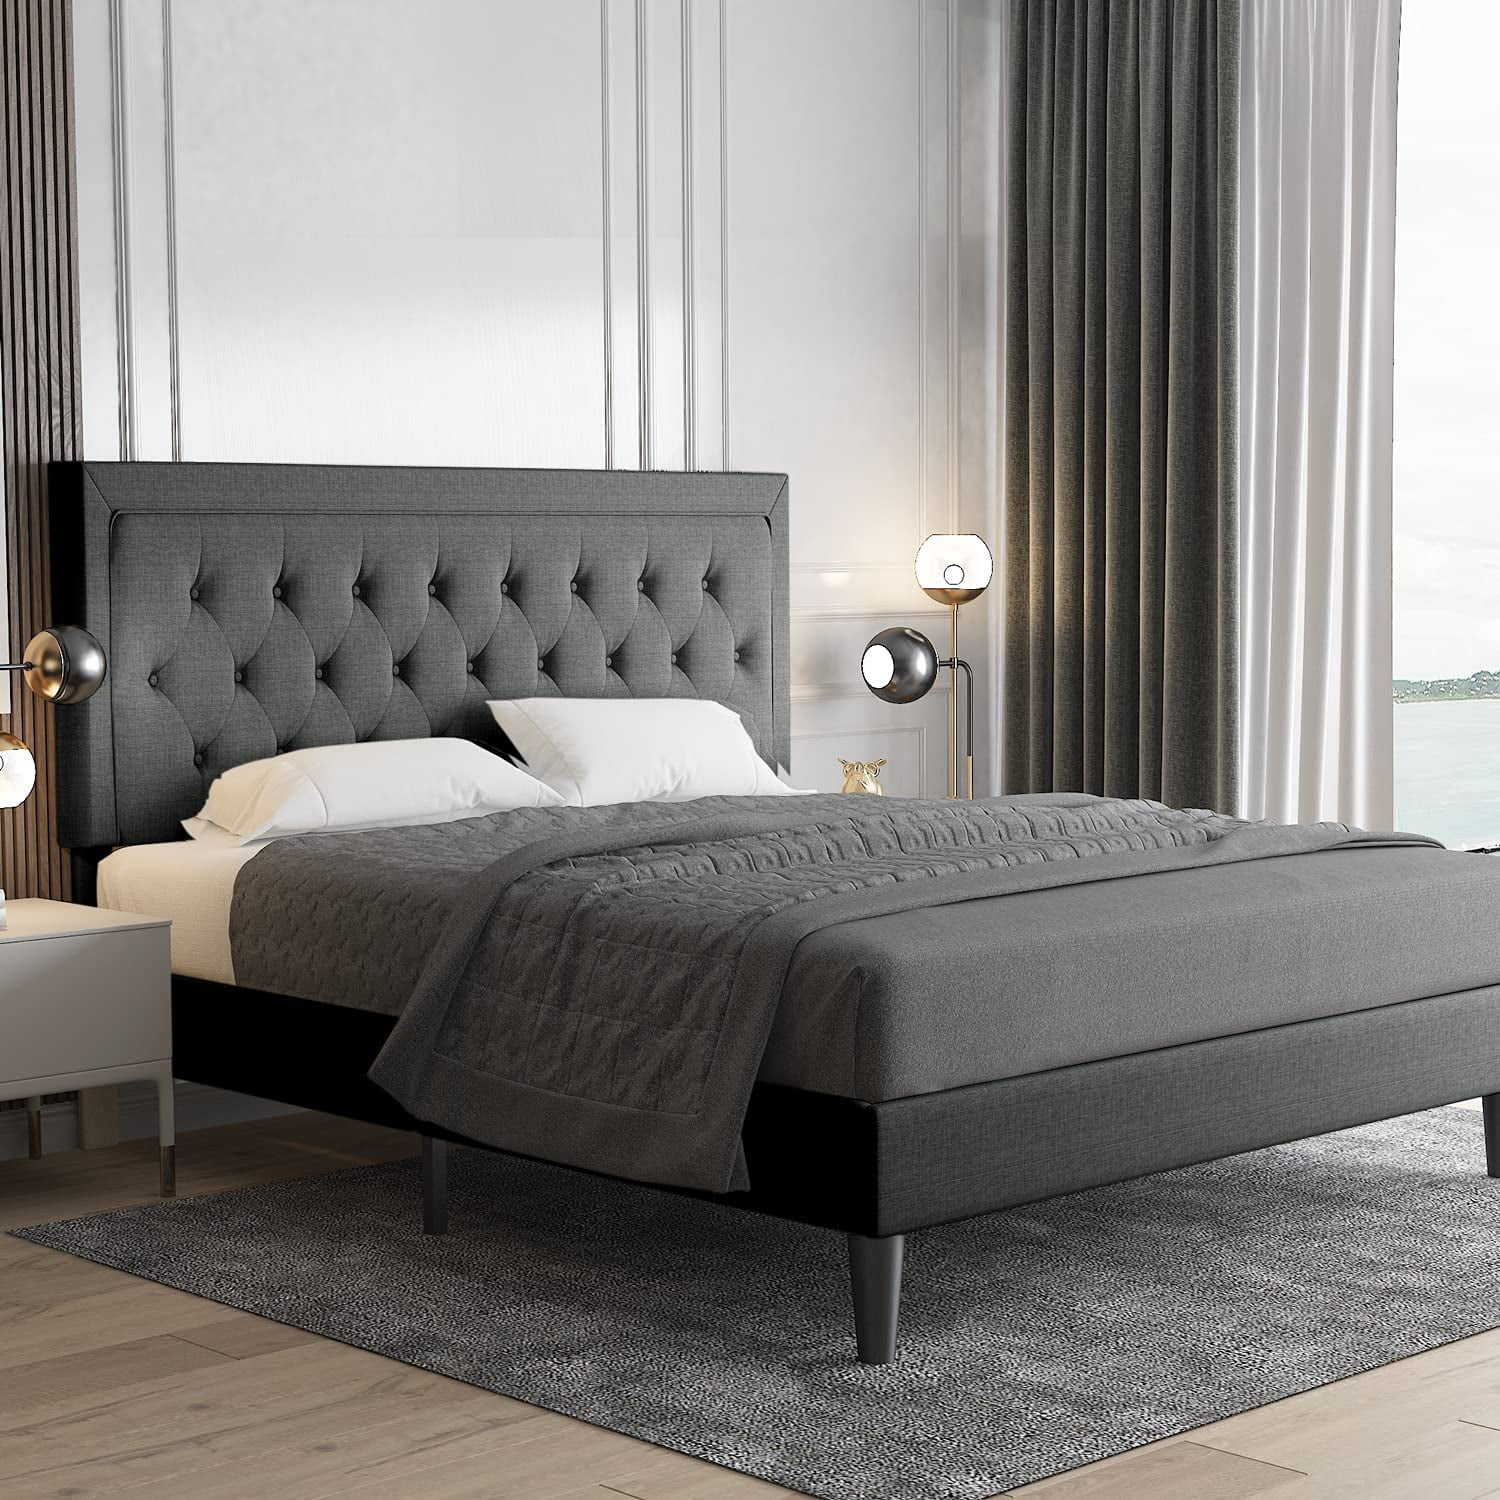 Allewie Queen Size Bed Frame Upholstered Platform Bed with Adjustable Headboard, Box Spring not Needed, Dark Grey